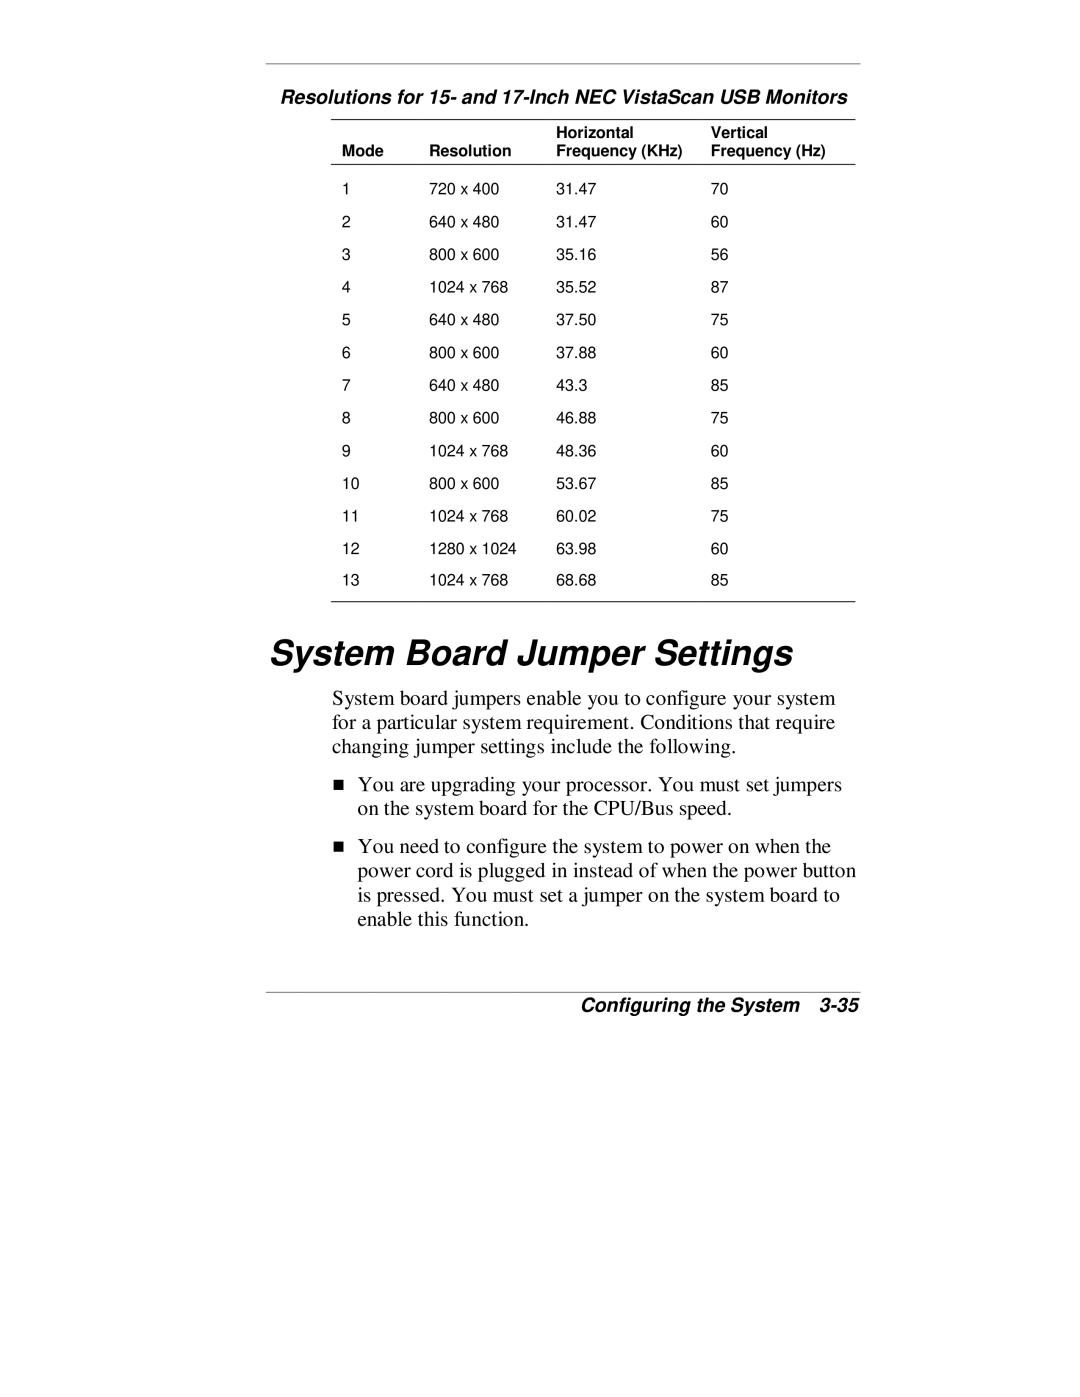 NEC VT 300 Series manual System Board Jumper Settings 